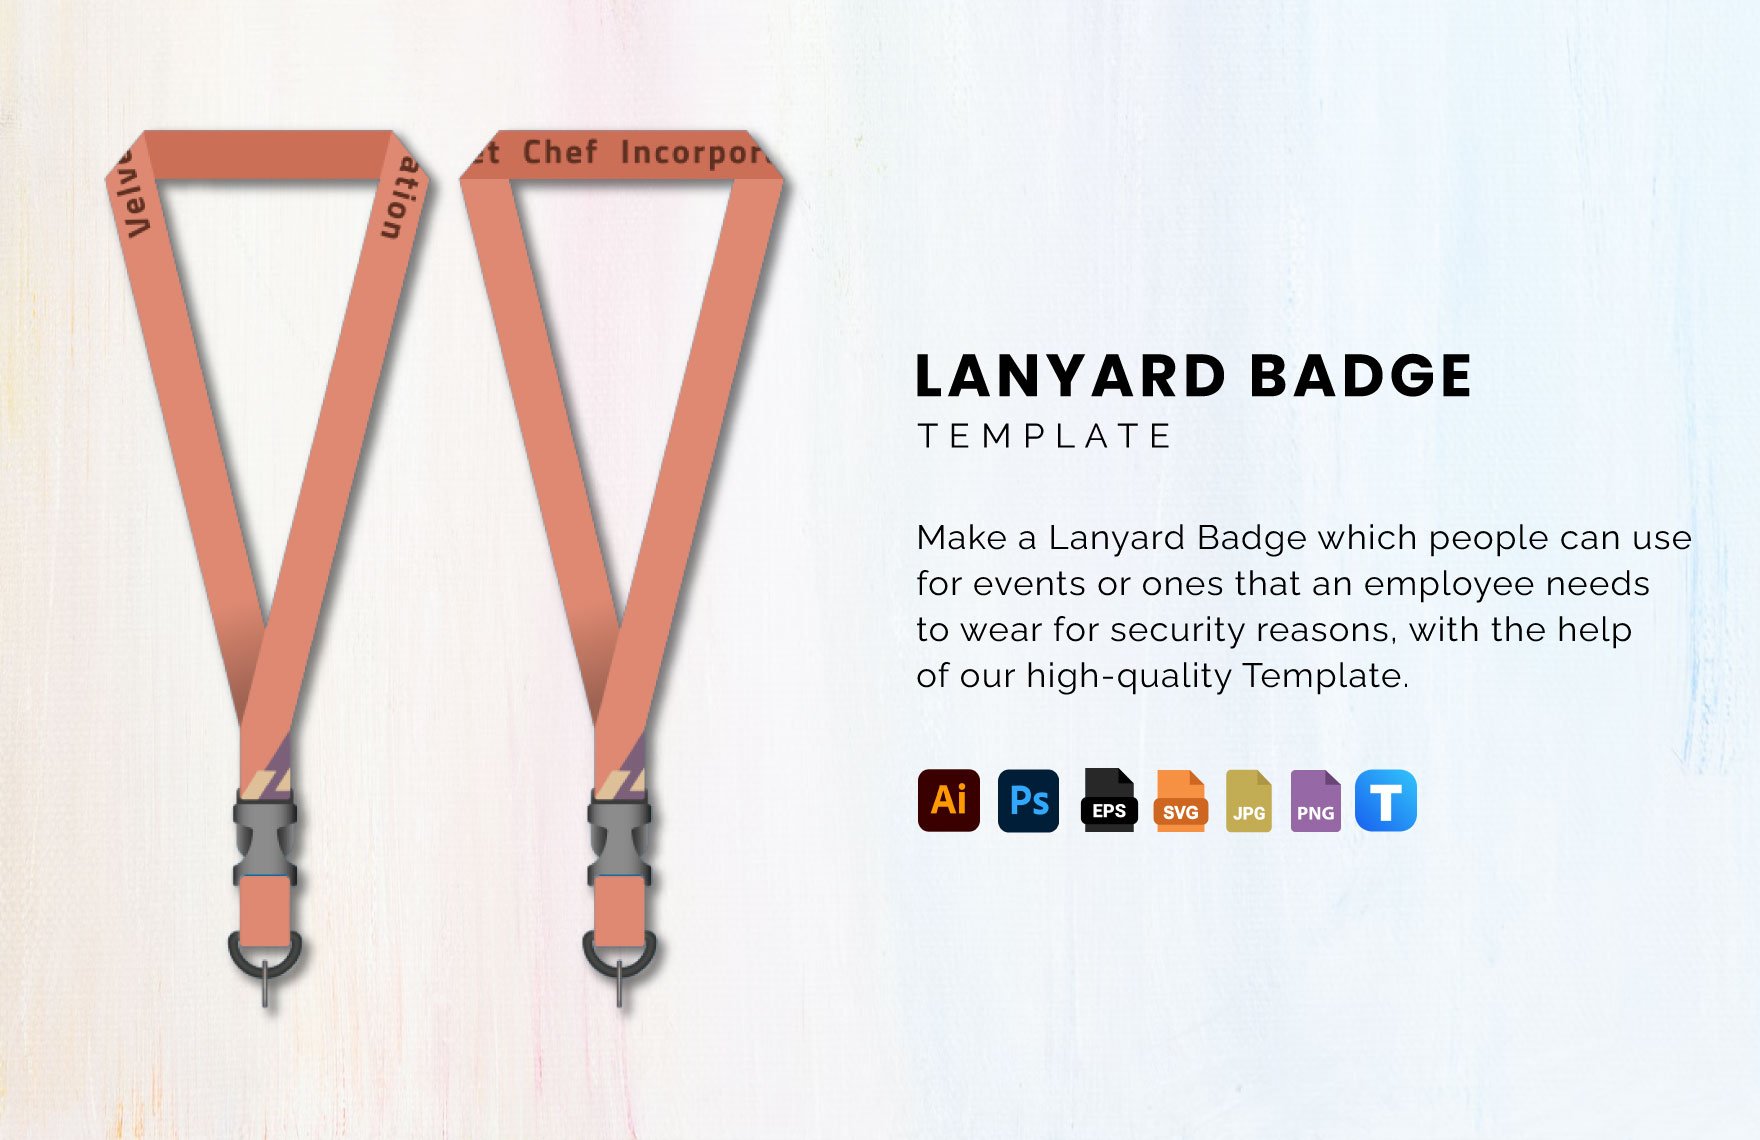 Lanyard Badge Template